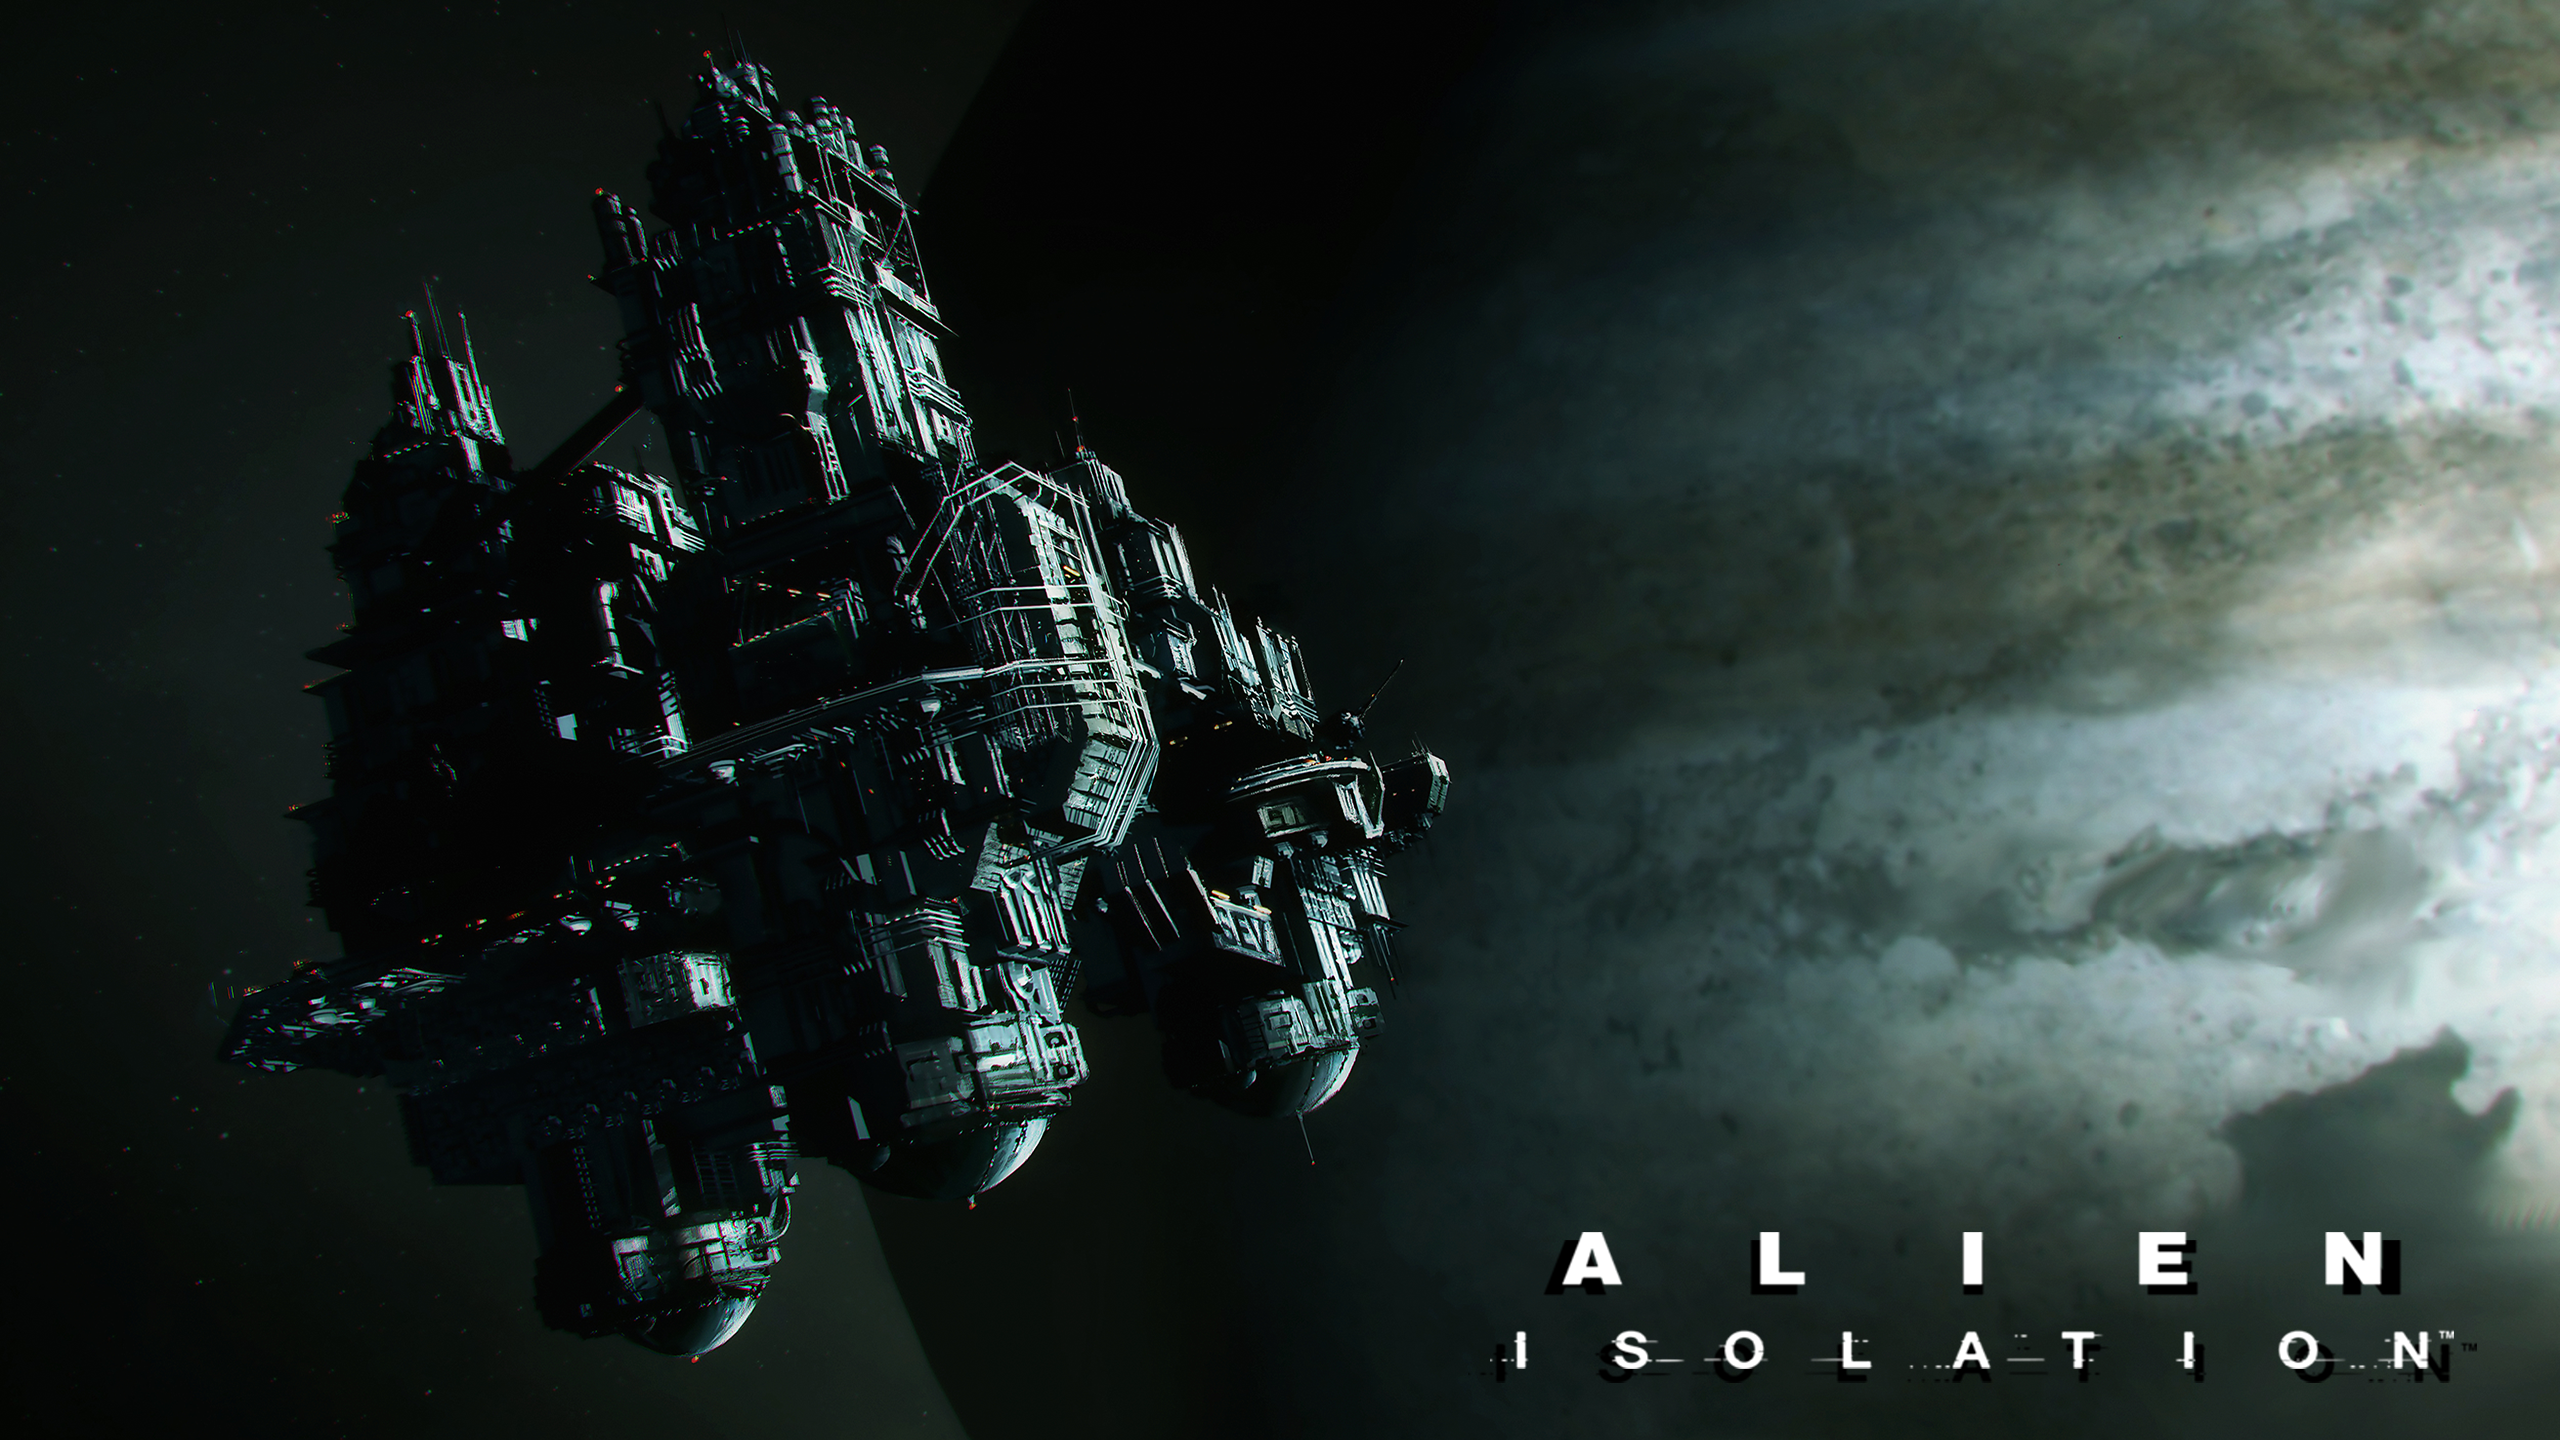 Alien Isolation Alien Movie Aliens Aliens Movie Space Spacestation Spaceship Concept Art Artwork Fan 2560x1440